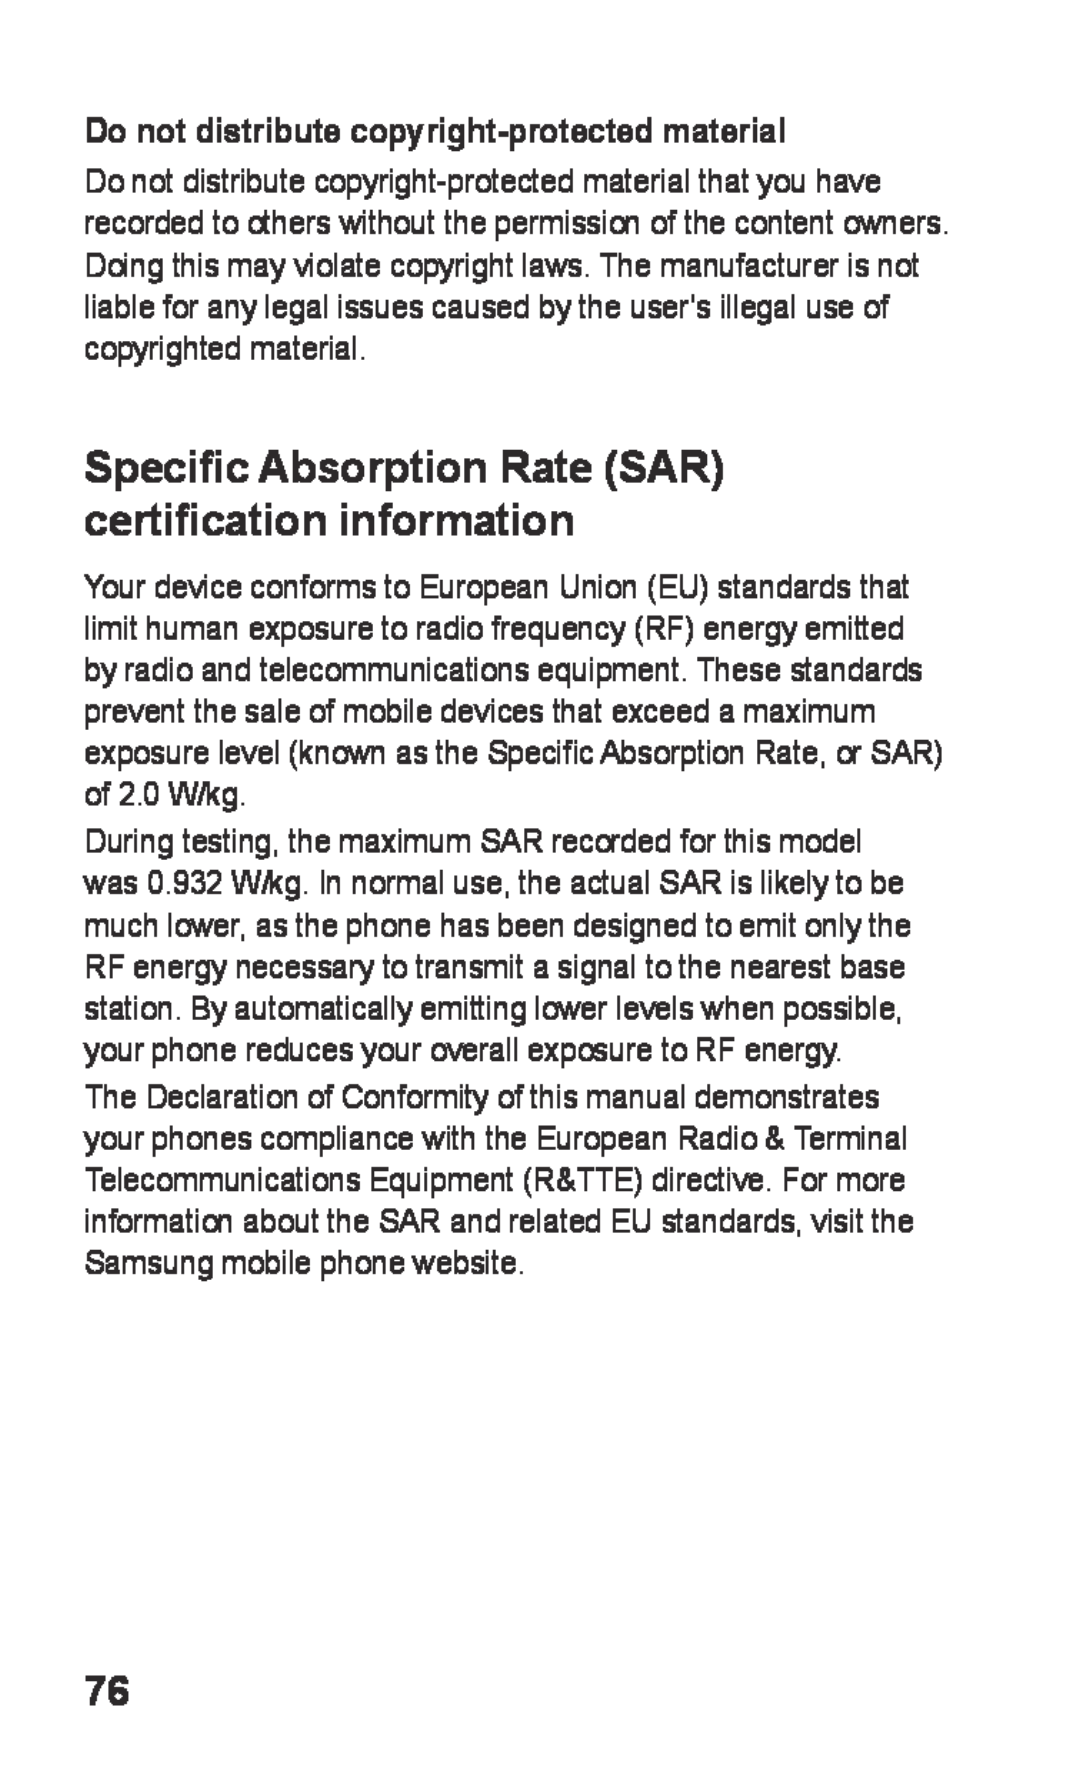 Samsung GT-S5260OKPAMN, GT-S5260RWPDBT, GT-S5260OKPDBT manual Specific Absorption Rate SAR certification information 